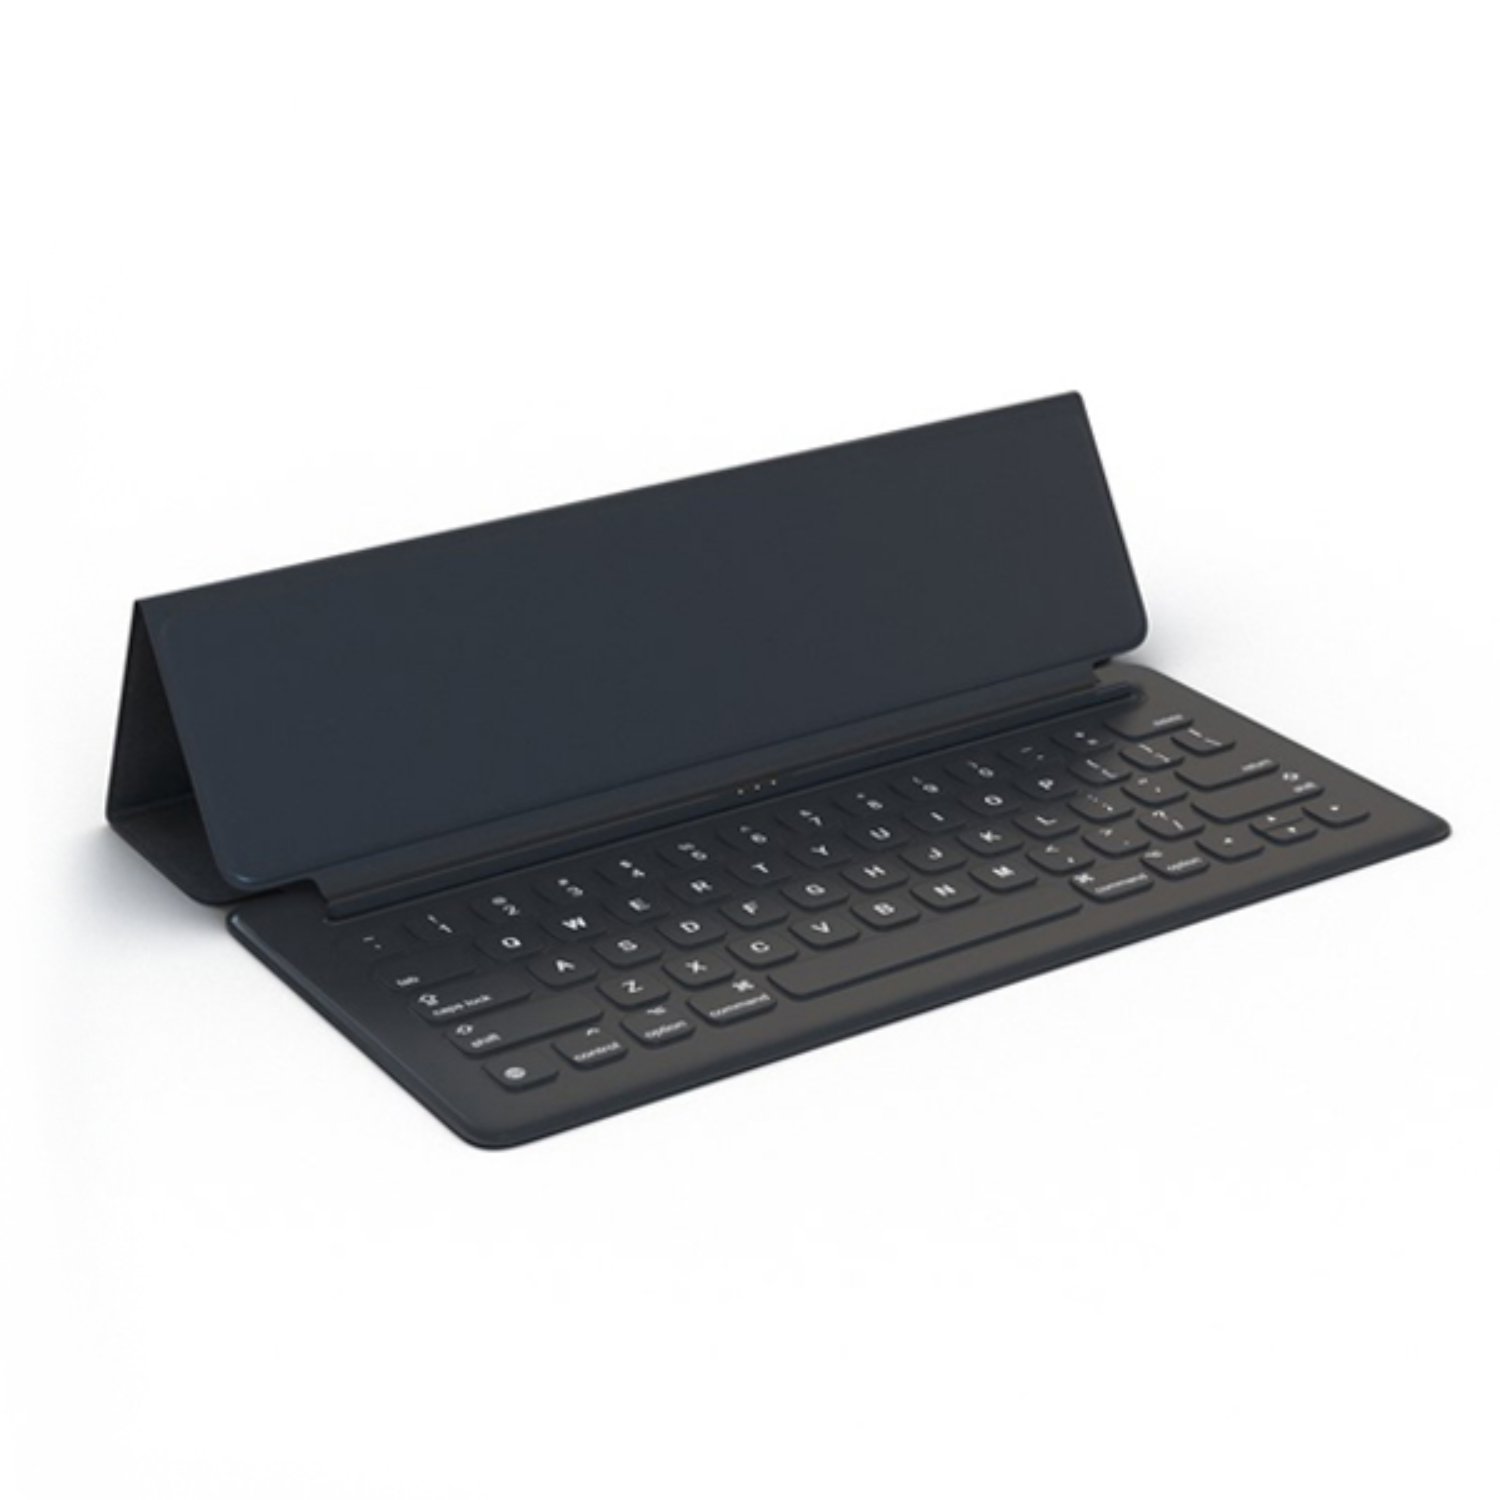 کیبورد اپل مدل iPad  Smart Keyboard 10.5 inch